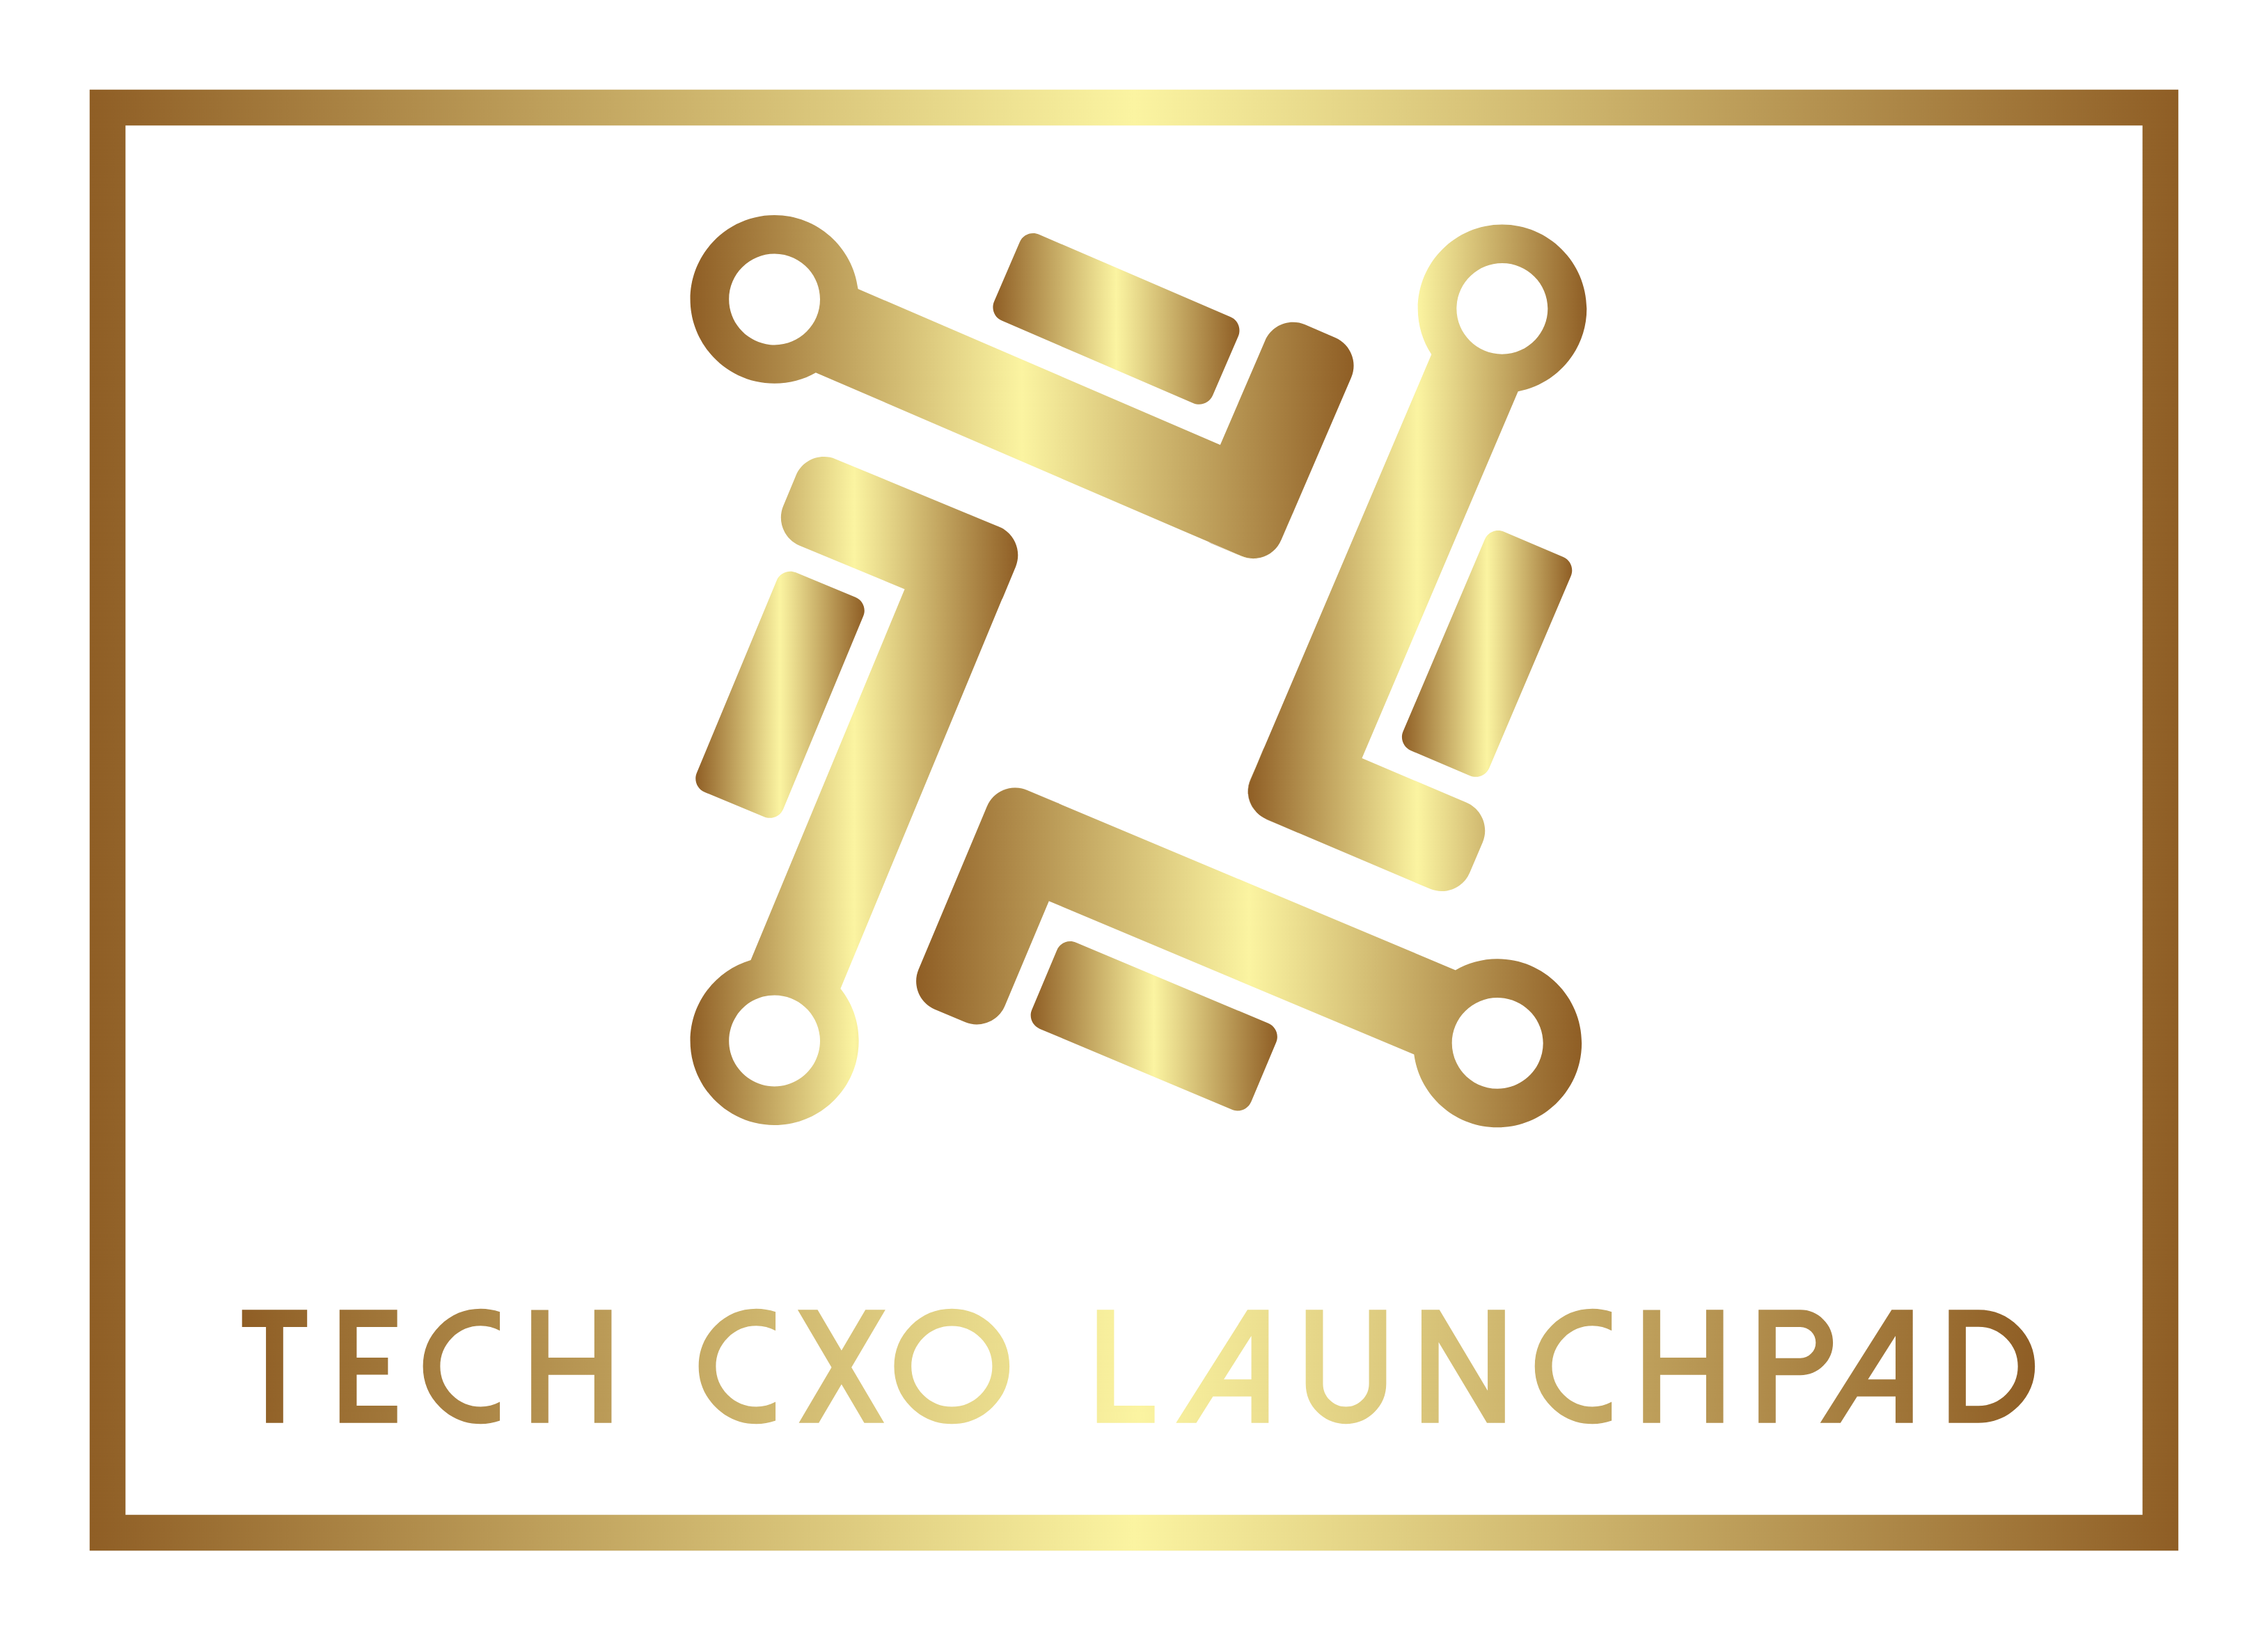 Tech CxO Launchpad color logo